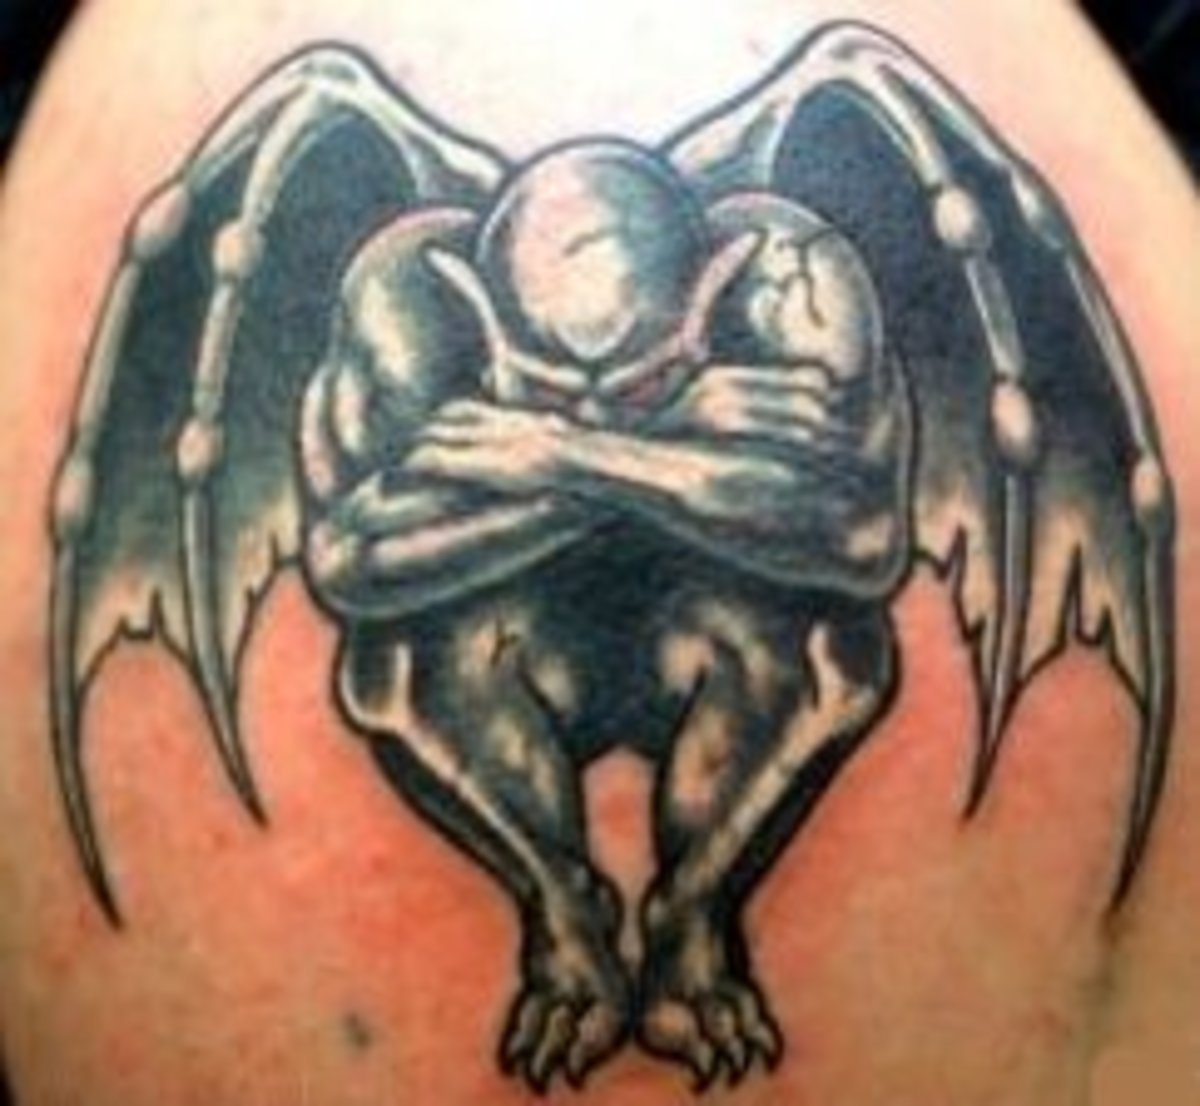 A winged gargoyle tattoo.